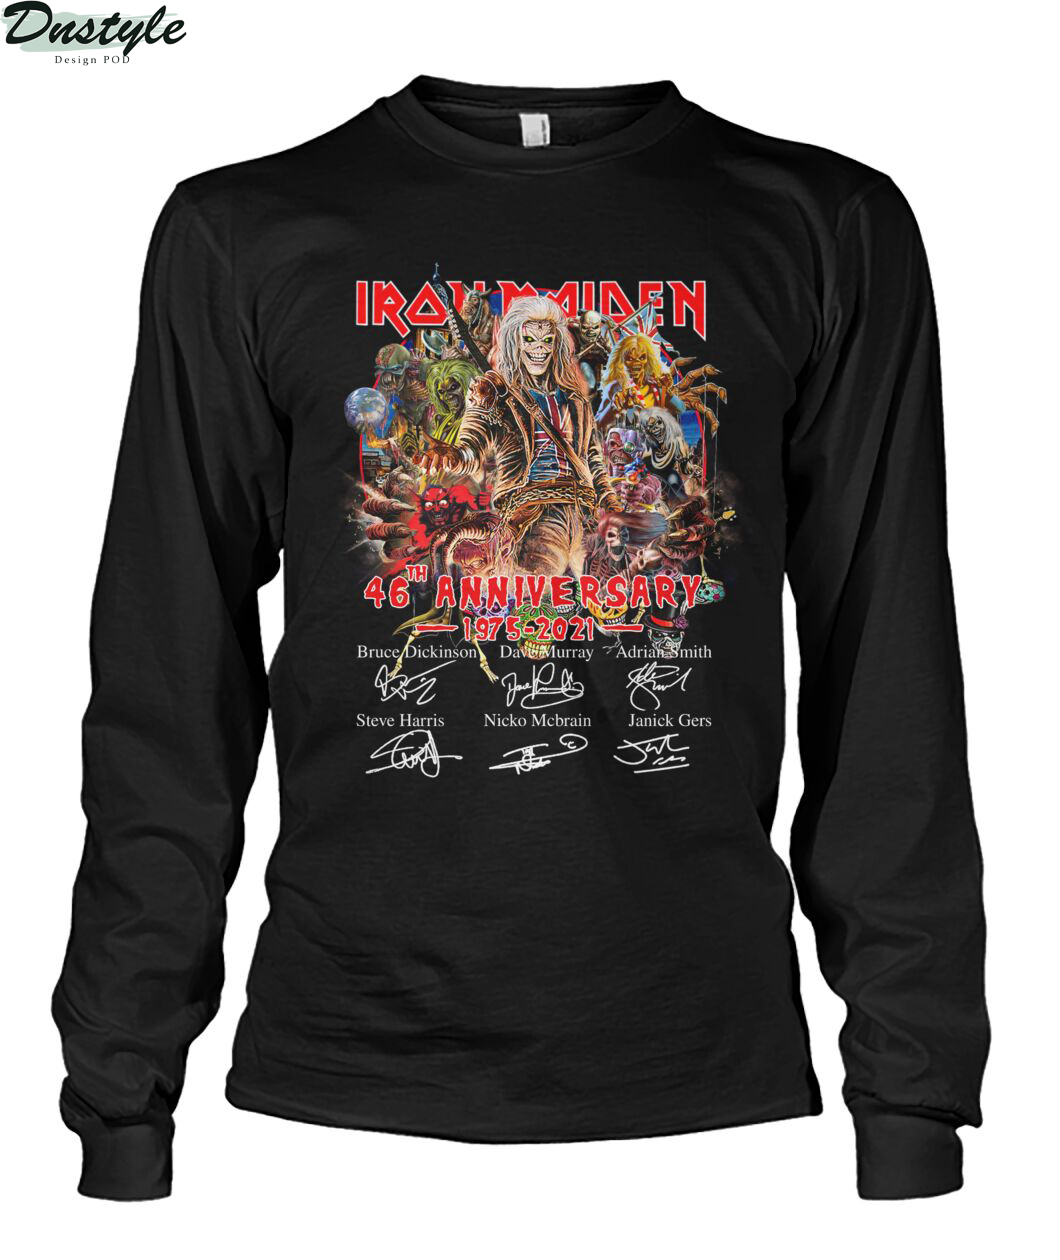 Iron Maiden 46th anniversary 1975 2021 signature long sleeve